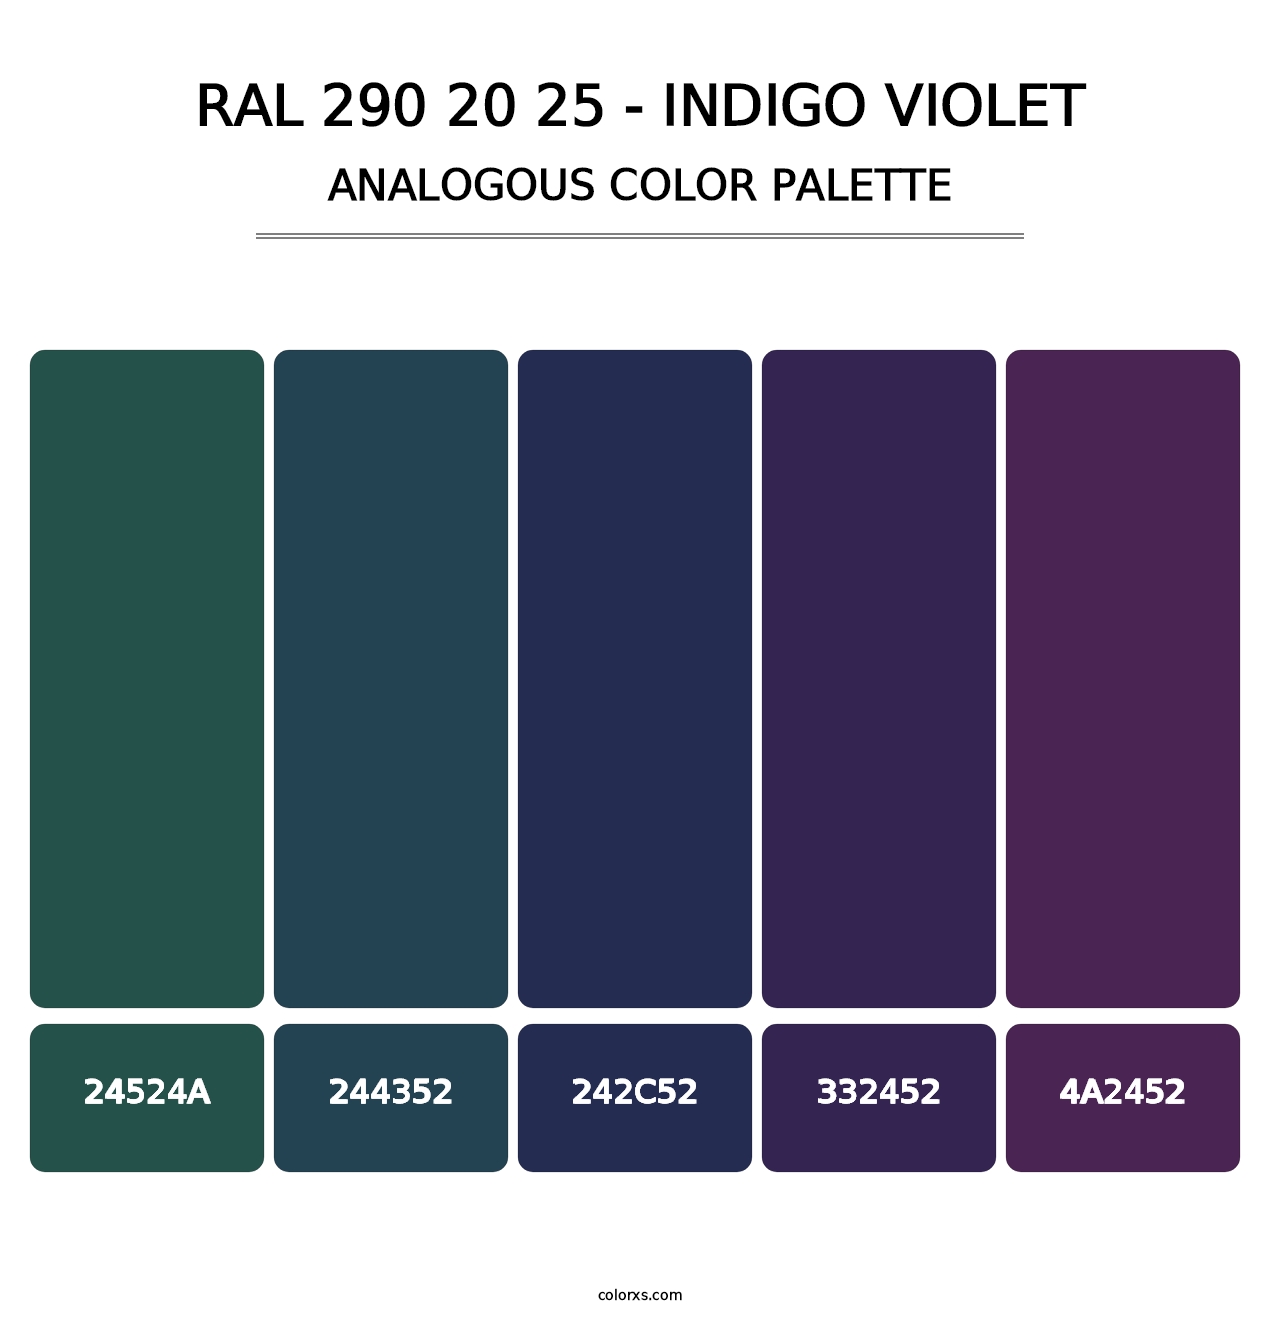 RAL 290 20 25 - Indigo Violet - Analogous Color Palette